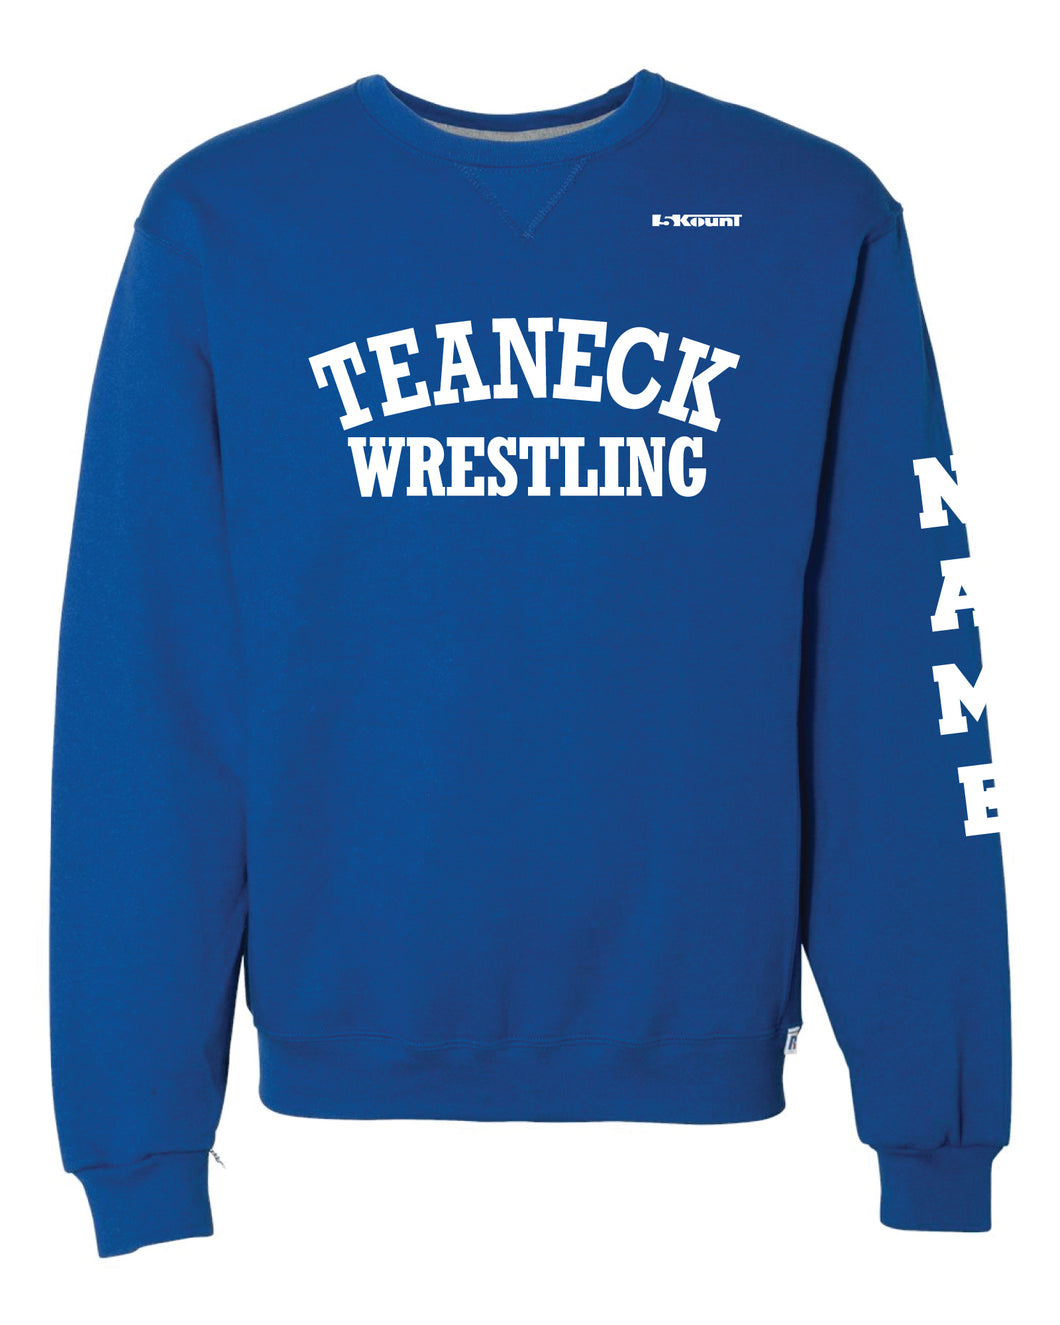 Teaneck Wrestling Russell Athletic Cotton Crewneck Sweatshirt - Royal - 5KounT2018